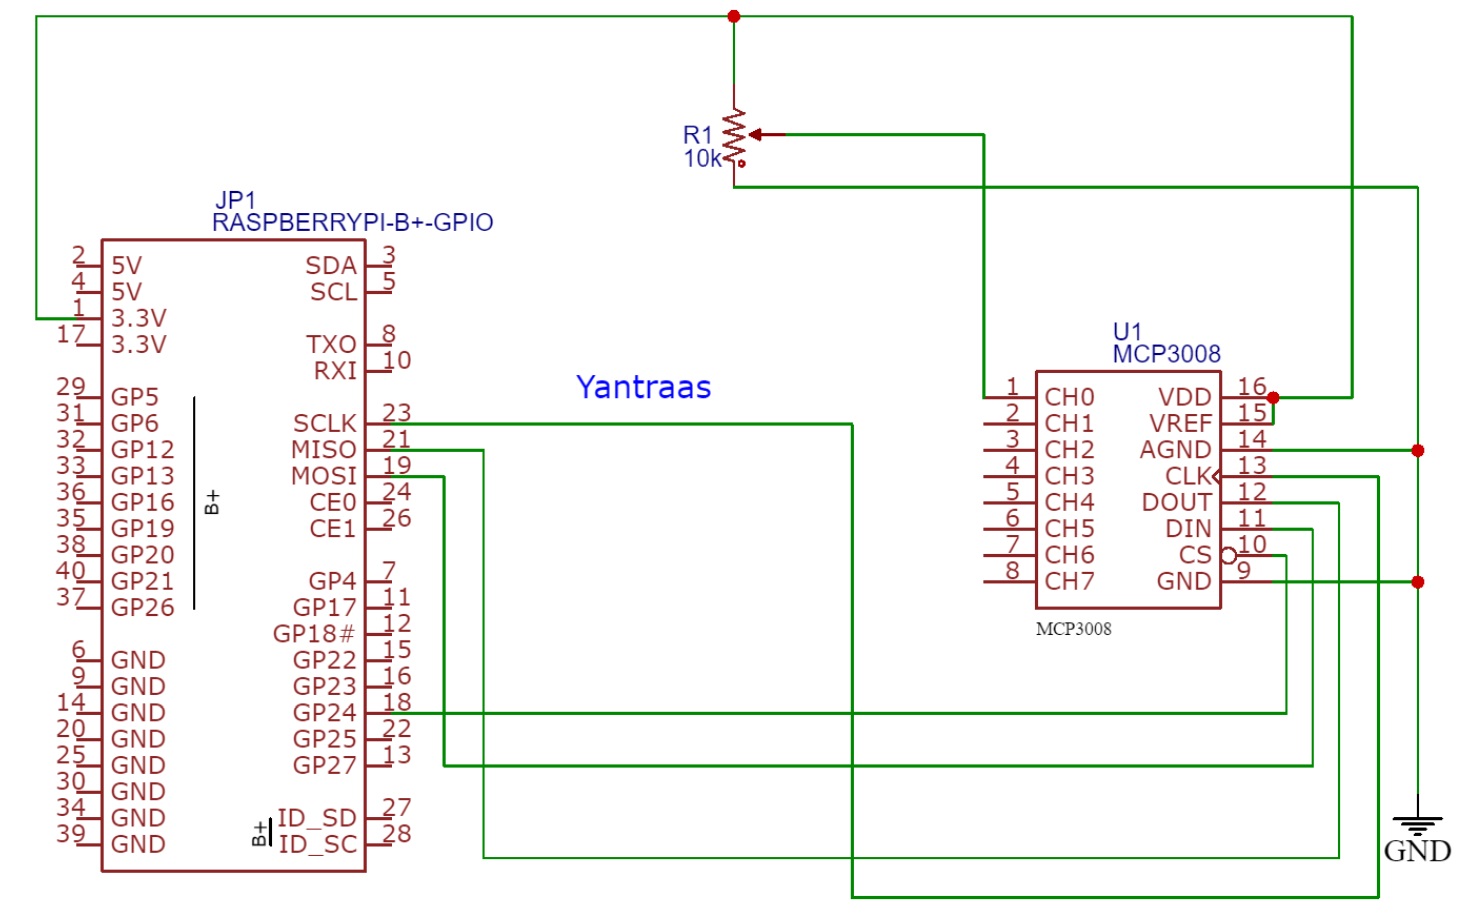 interfacing arduino sensors work with raspberry pi using a using MCP3008 ADC